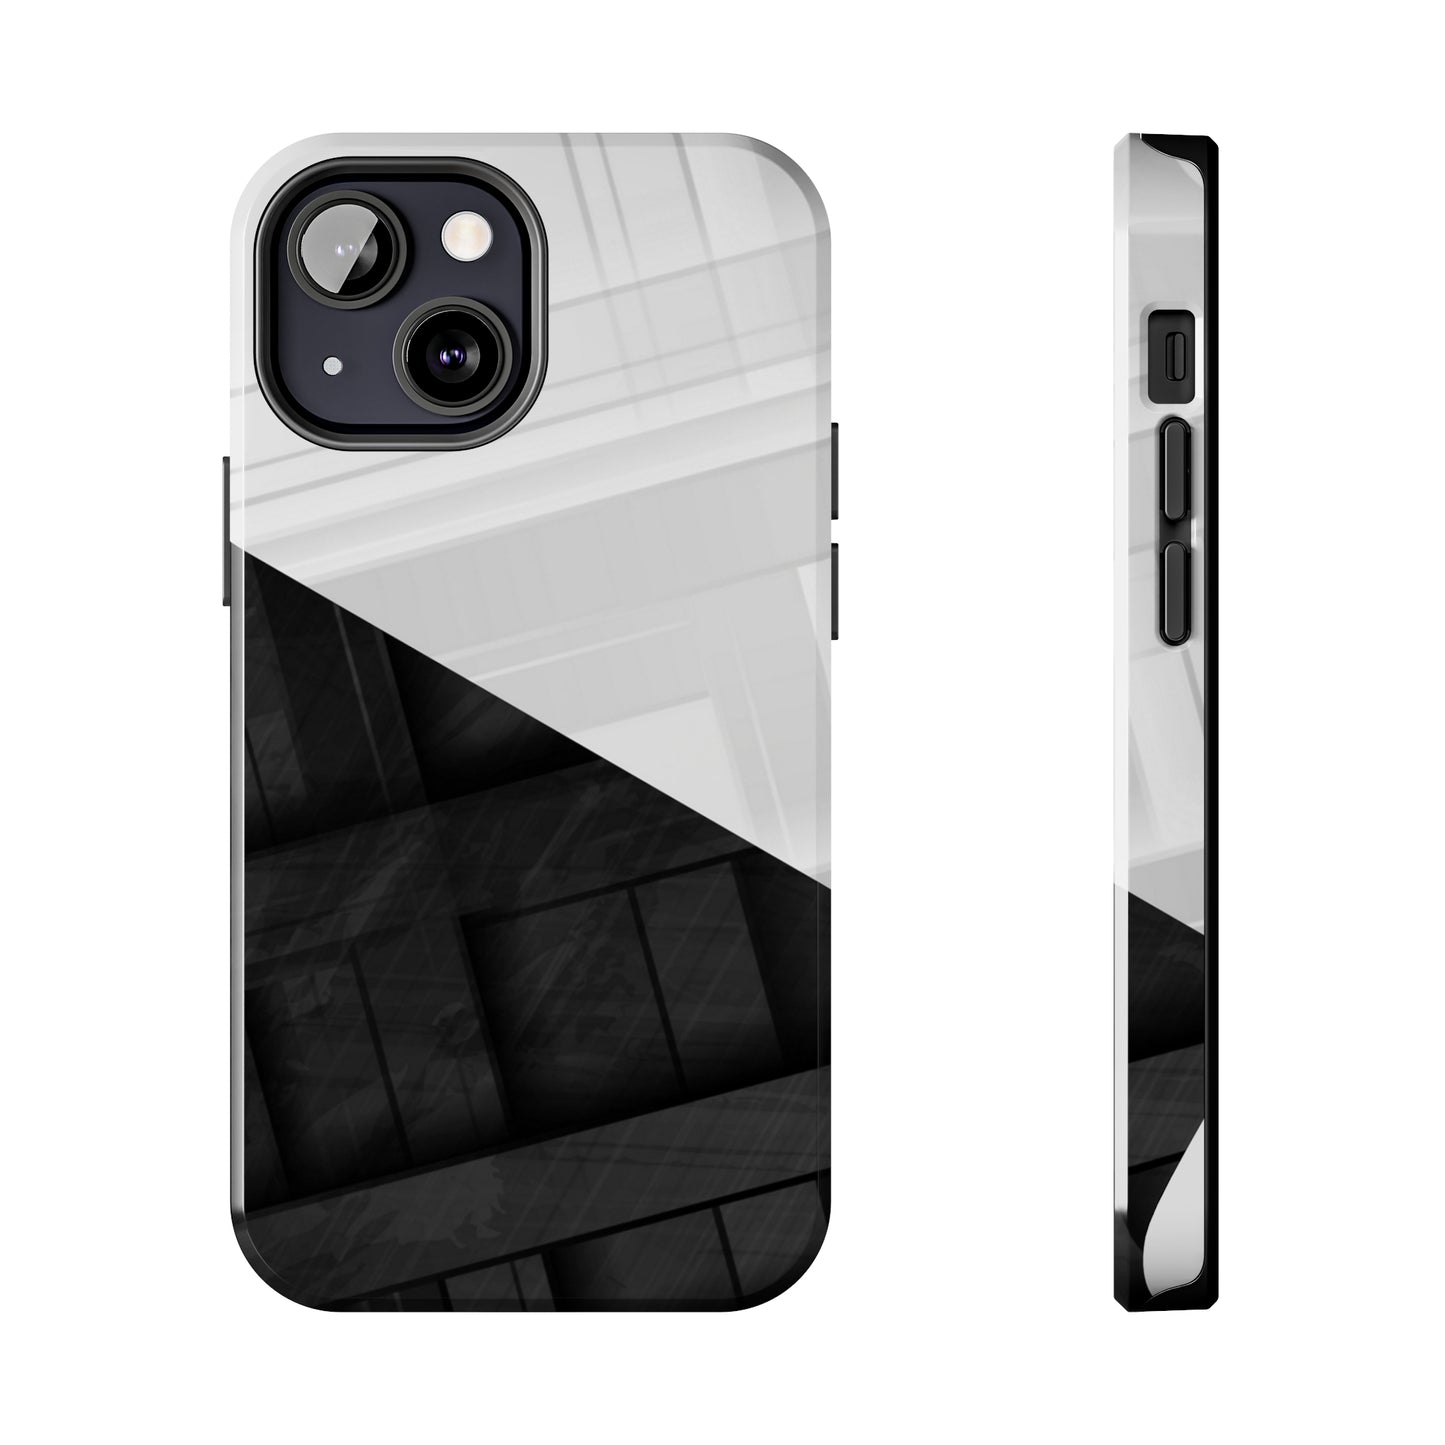 Monochrome Majesty: Black & White Phone Cases